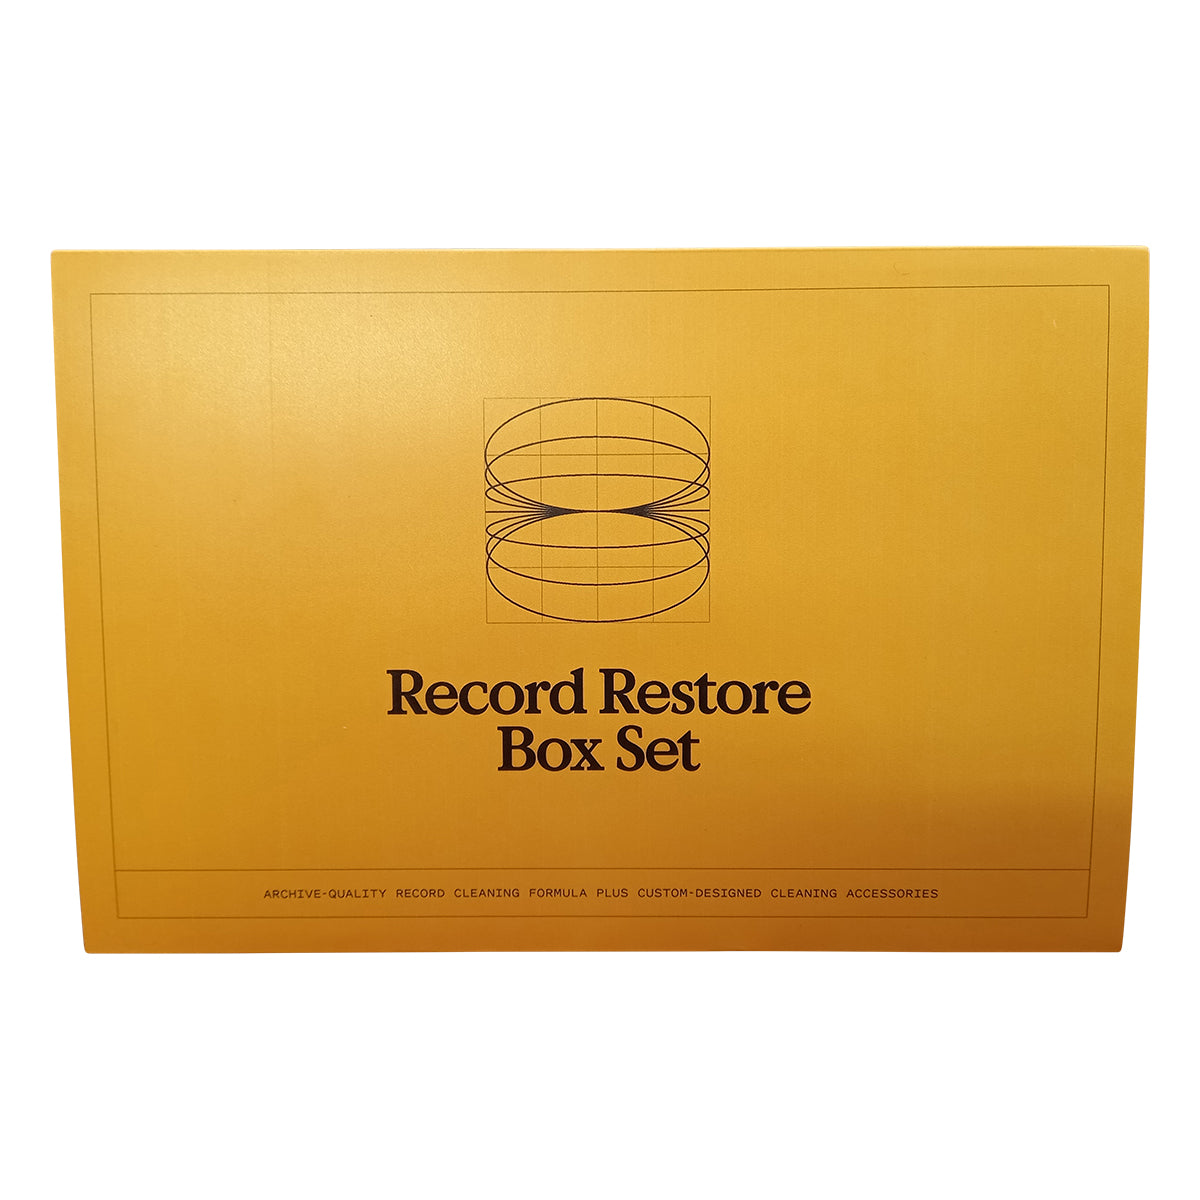 Record Restore Box Set - Starter Size